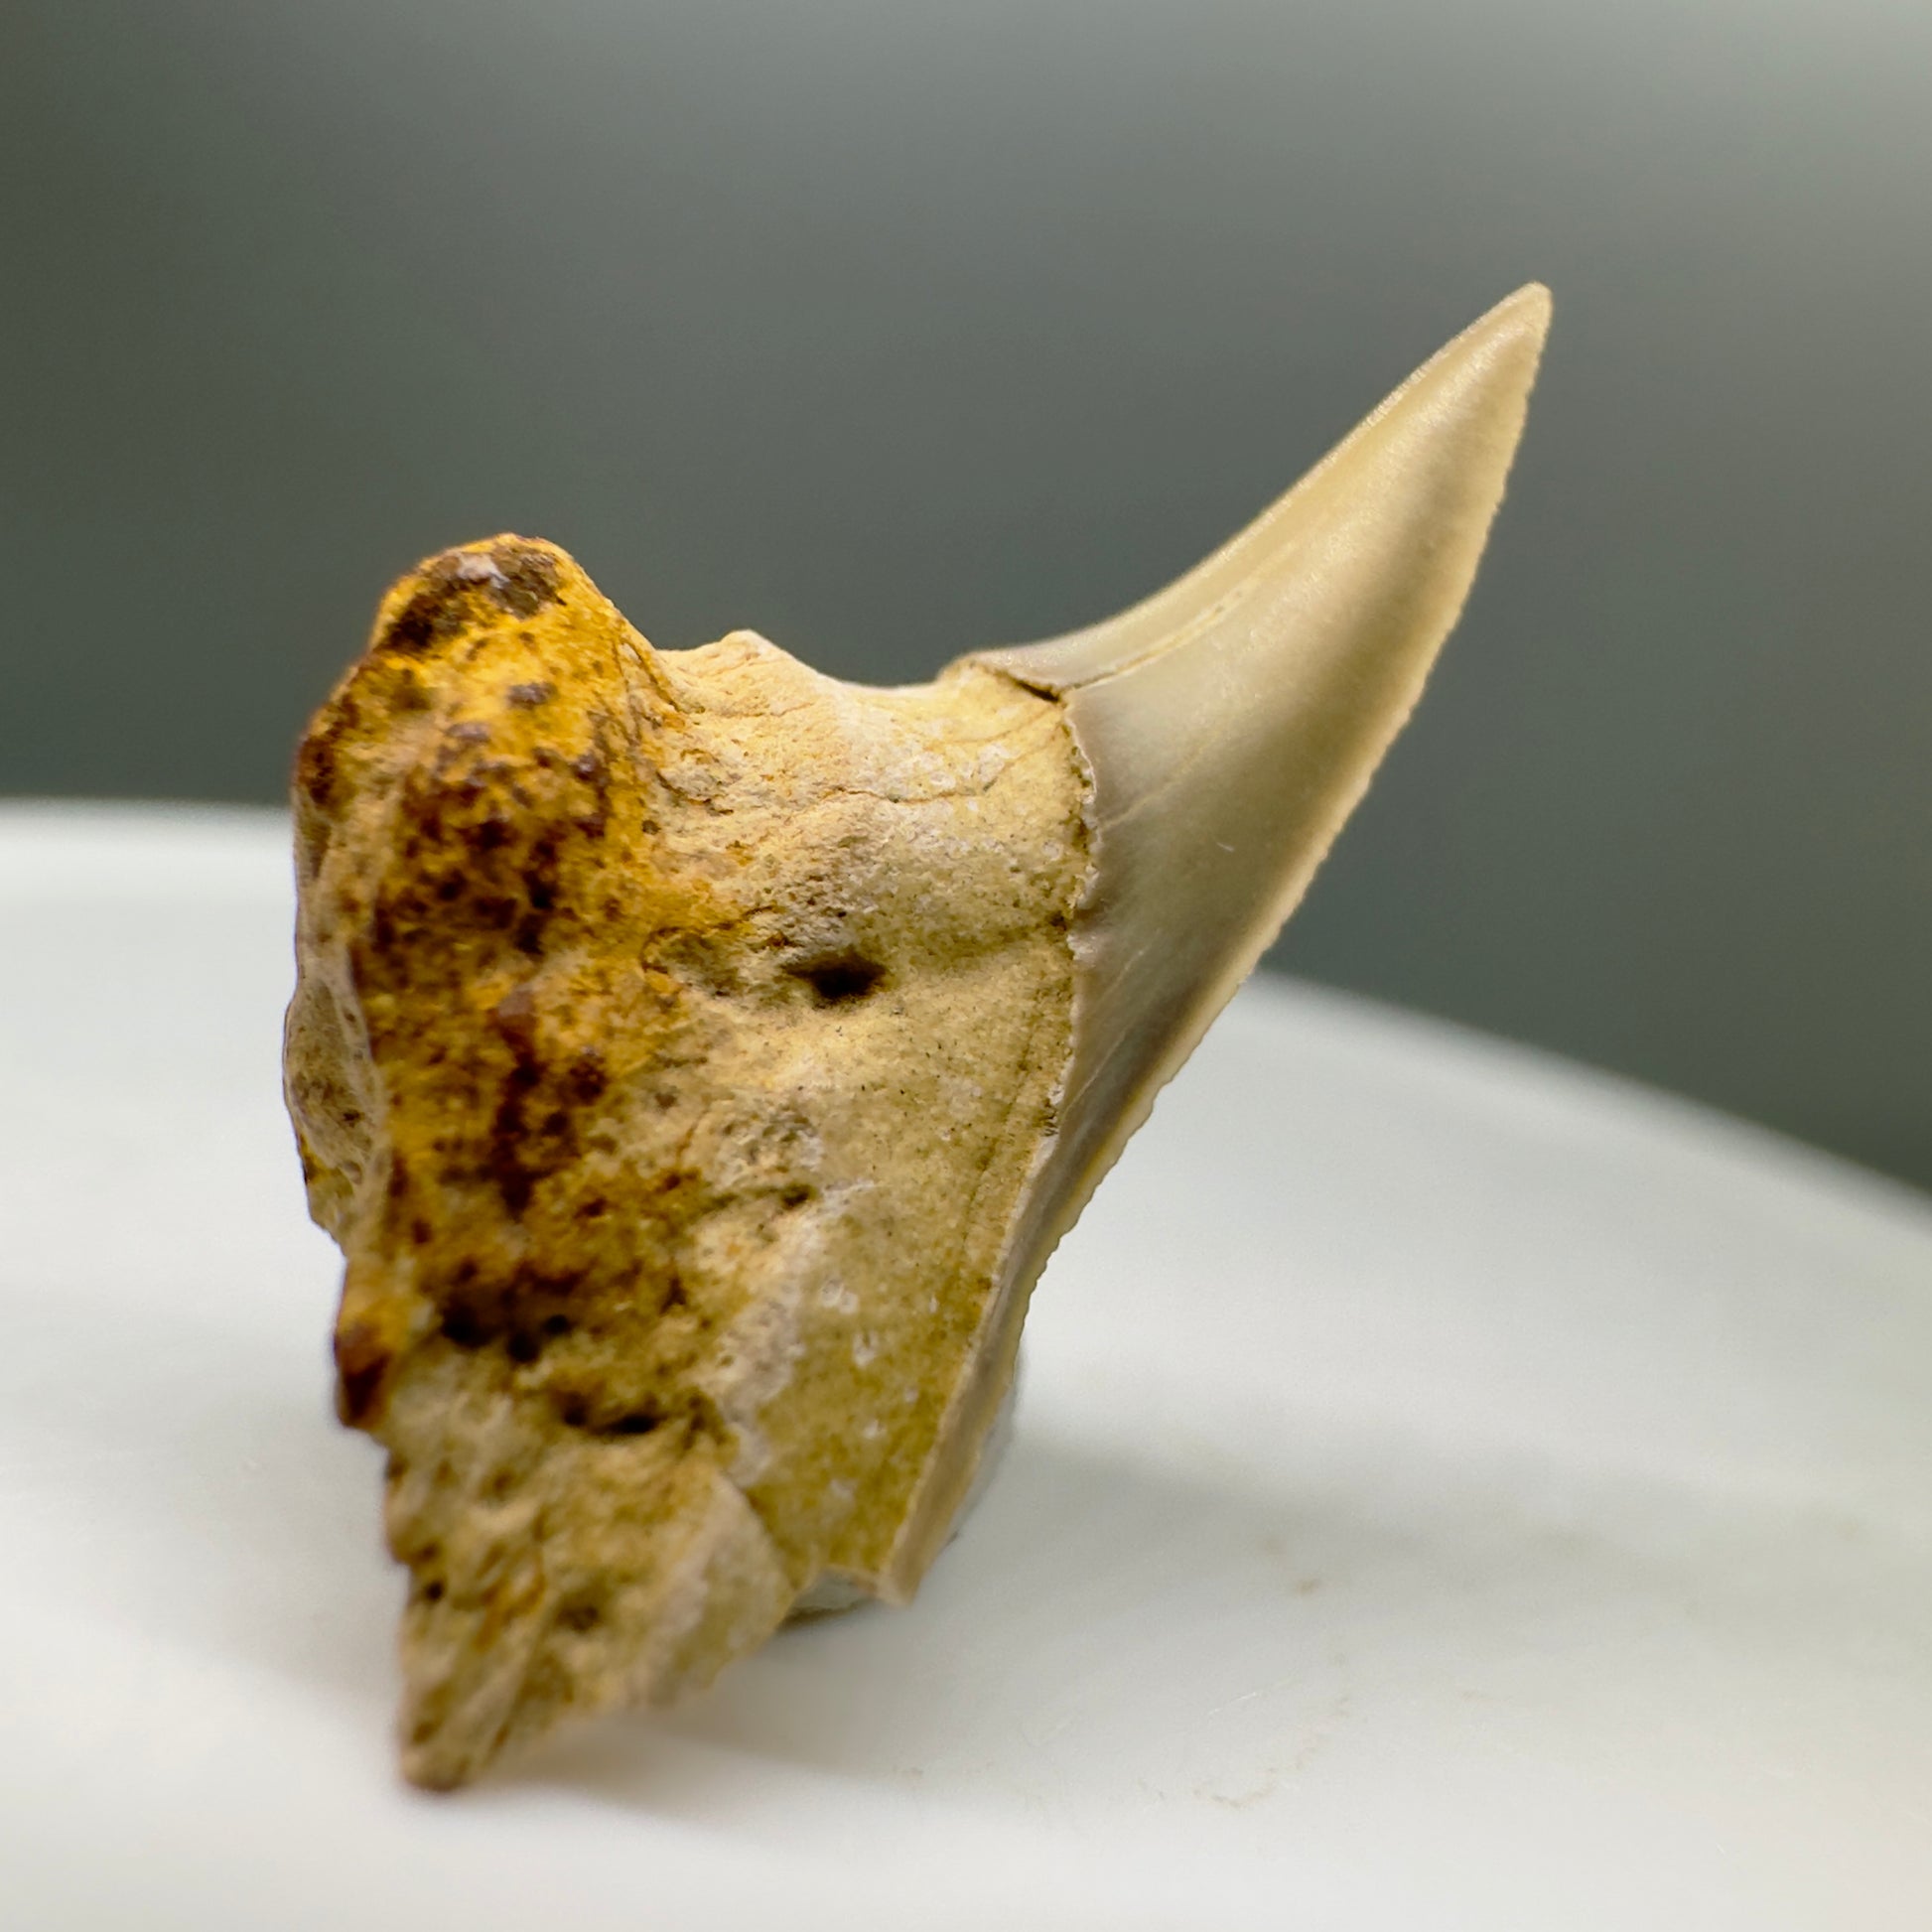 Rare 0.86" Fossil Paraisurus macrorhiza Shark Tooth - Russia R548 - Left